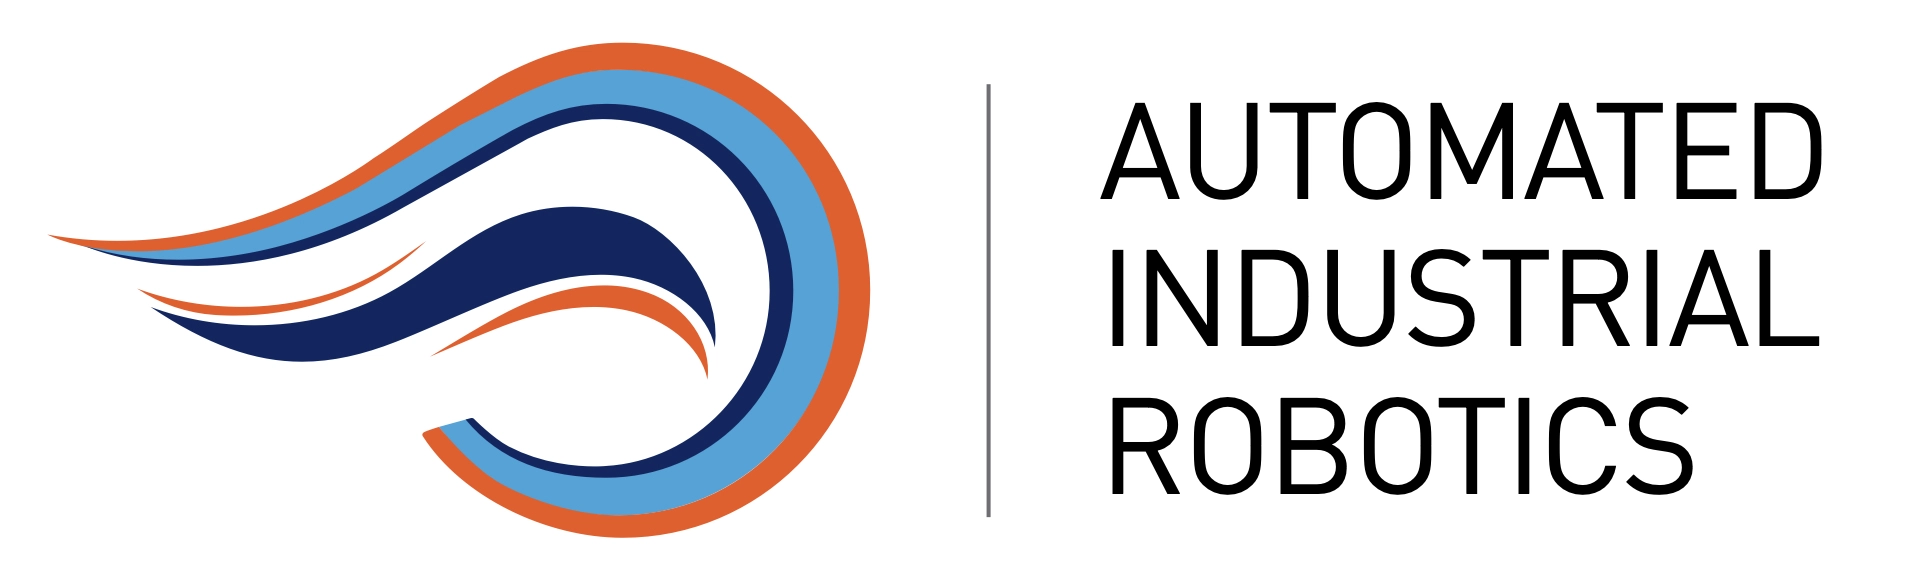 Automated Industrial Robotics logo